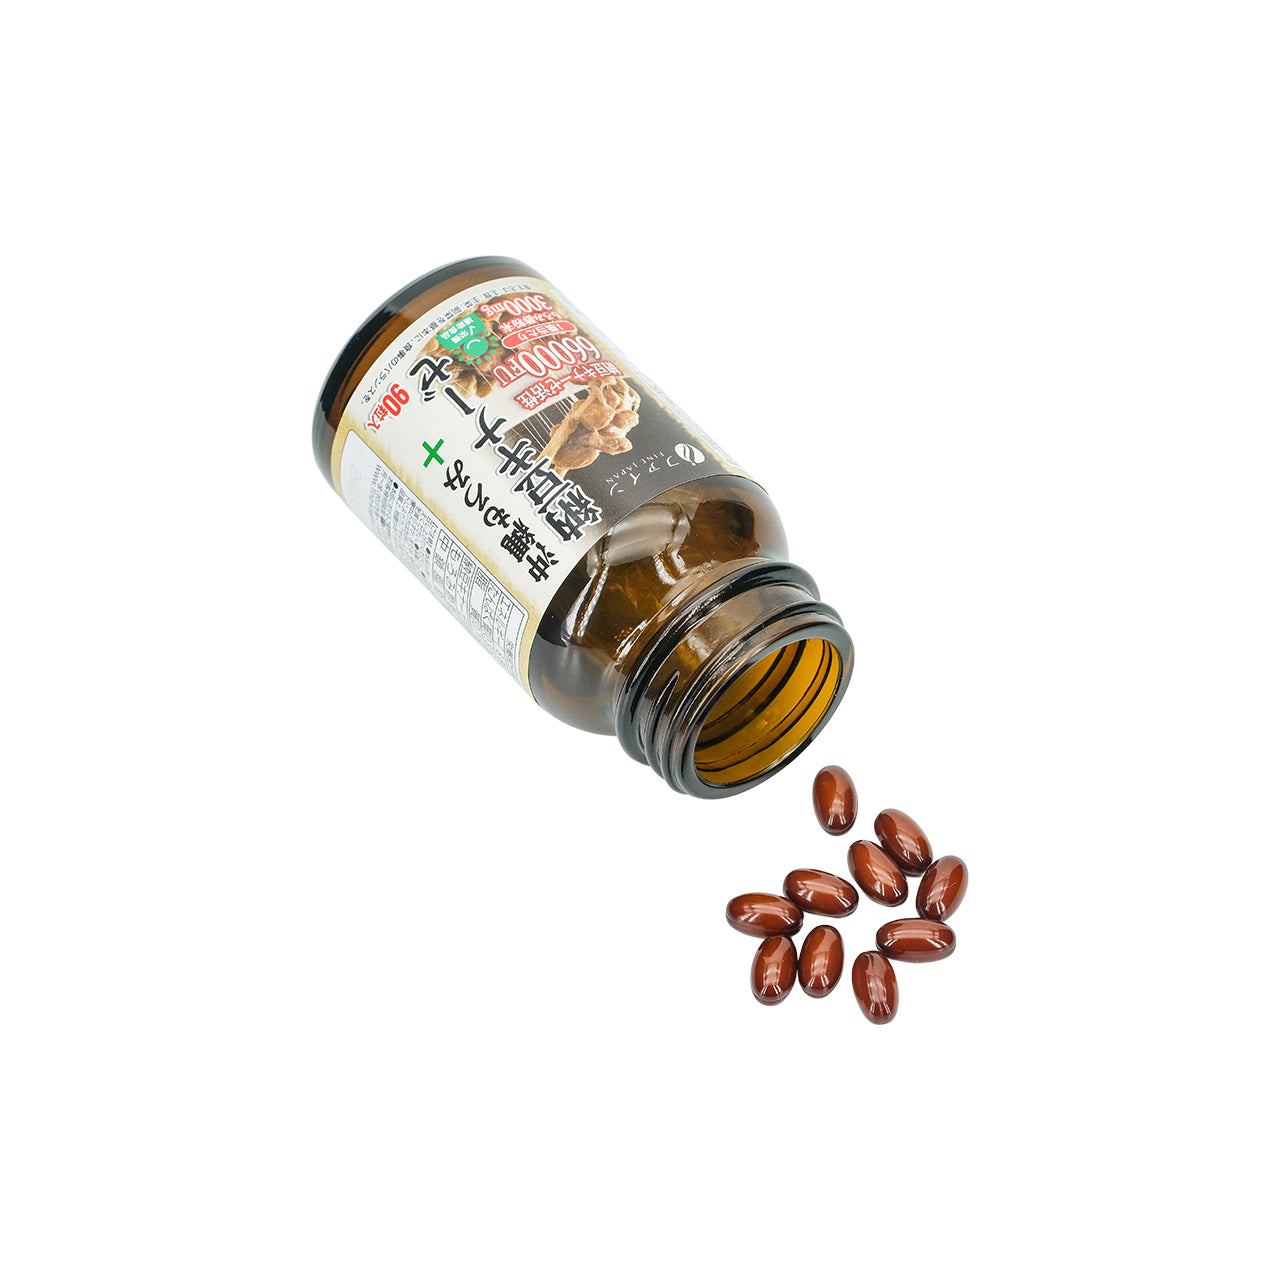 Fine Japan Okinawa Moromi Vinegar  Natto Kinase 90 capsules | Sasa Global eShop